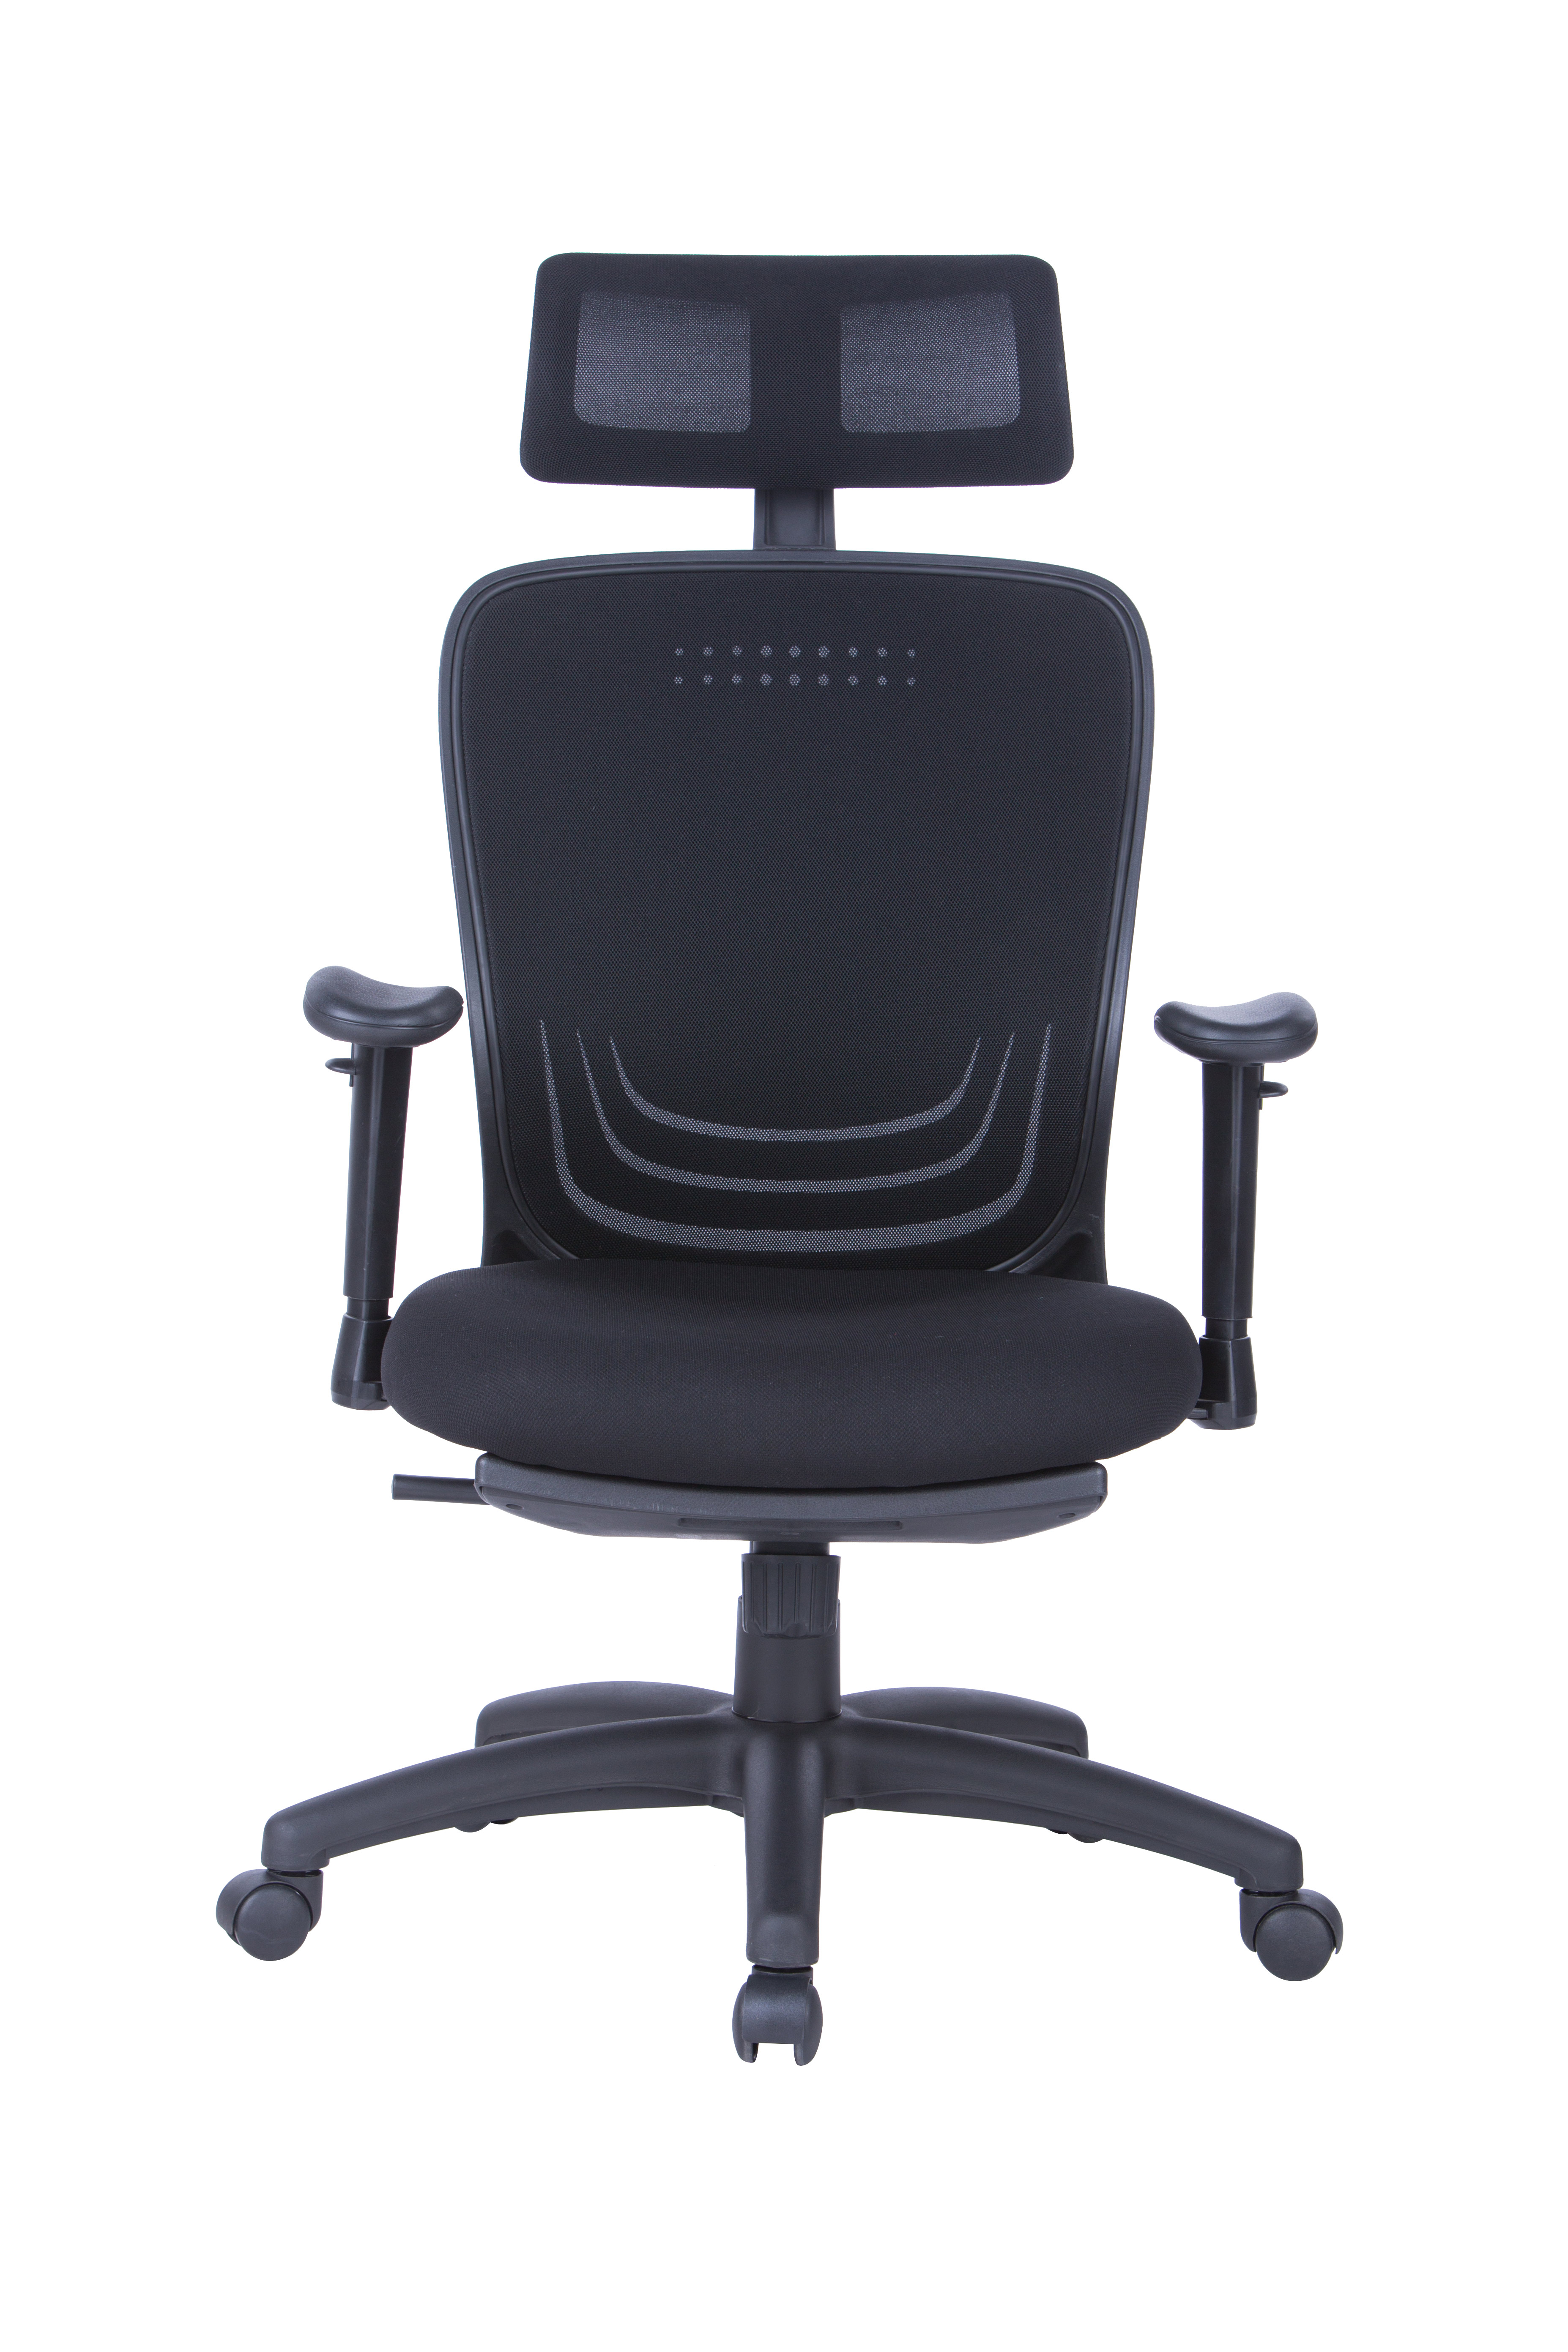 W-136CG Modern Office Rotating Chair